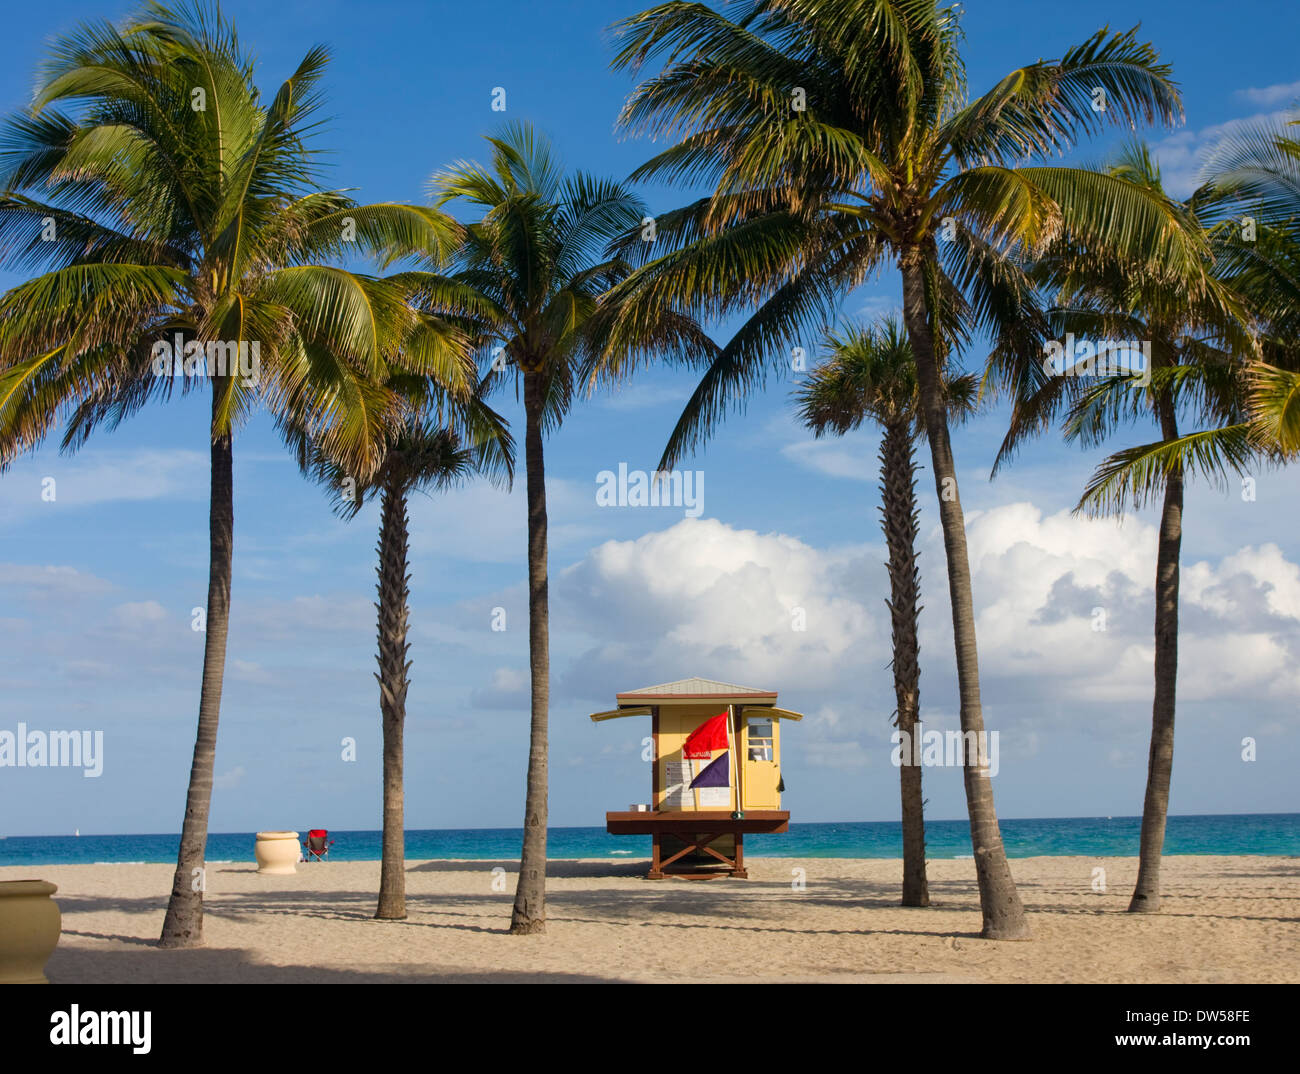 Lifeguard house between palm trees on the beach, Florida, USA Stock Photo